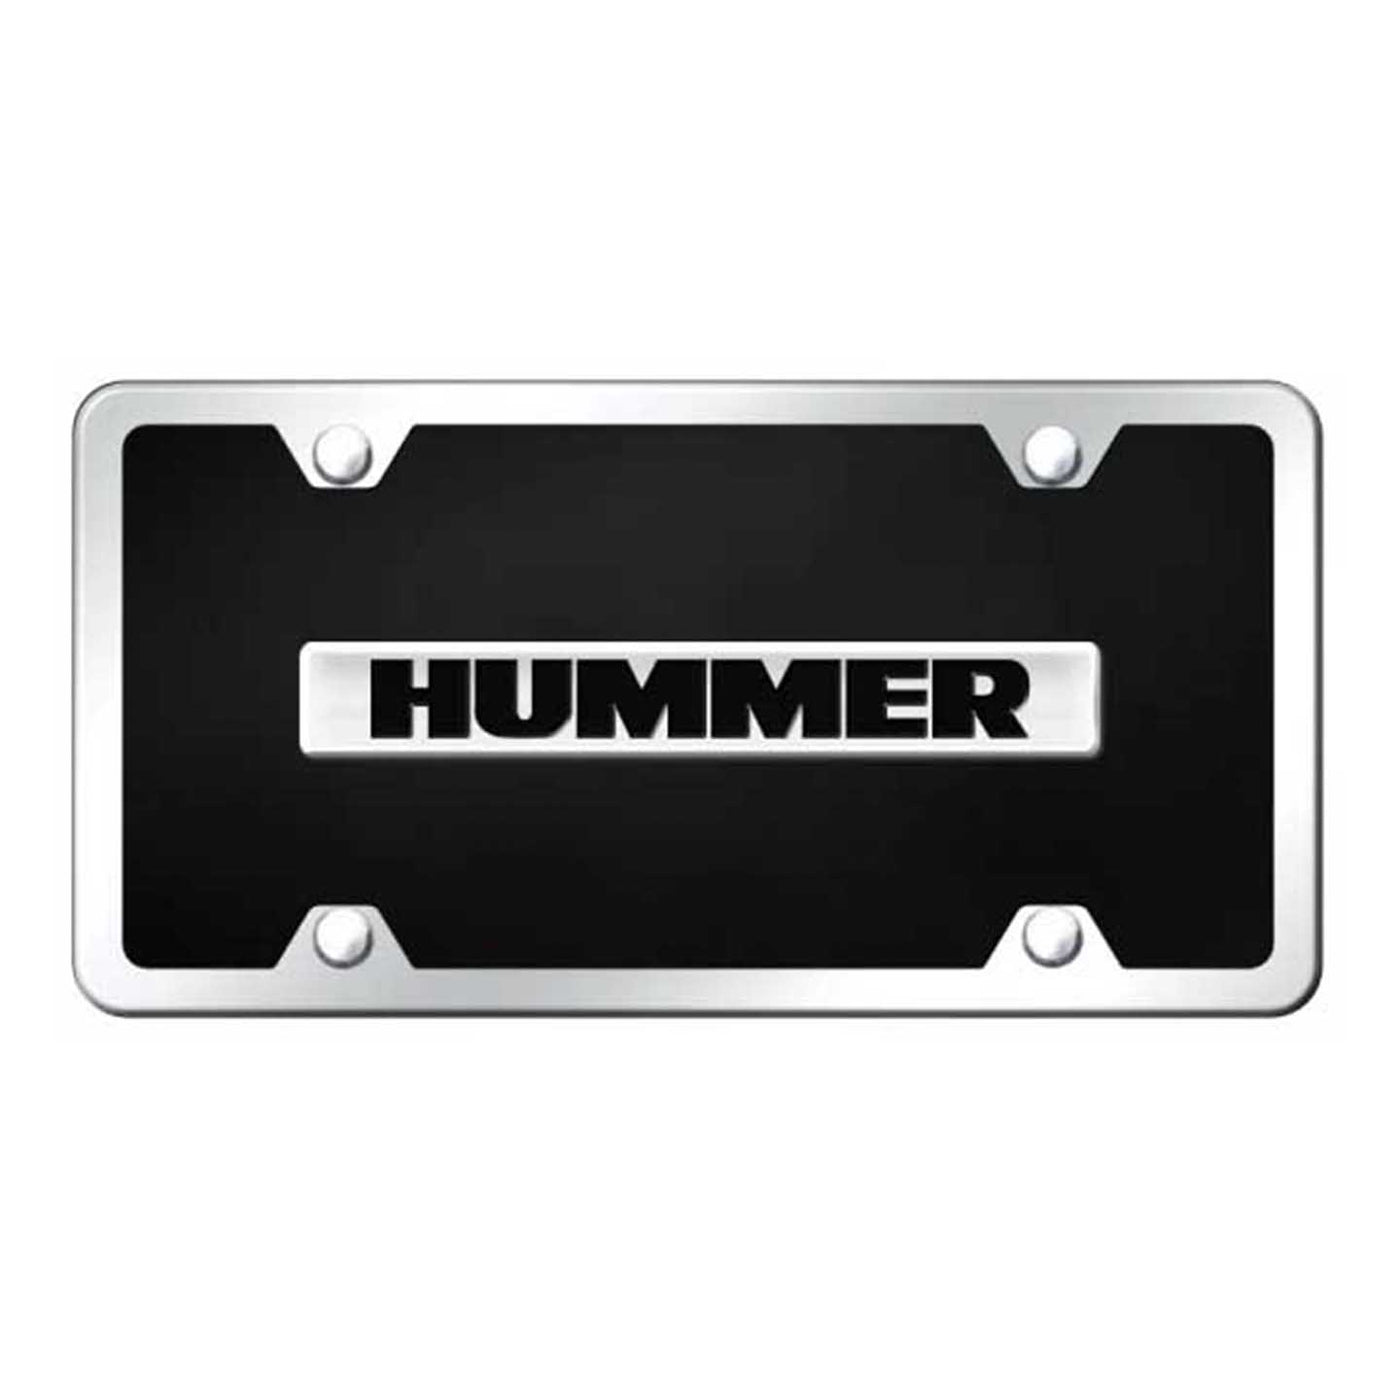 Hummer Name Acrylic Kit - Chrome on Black